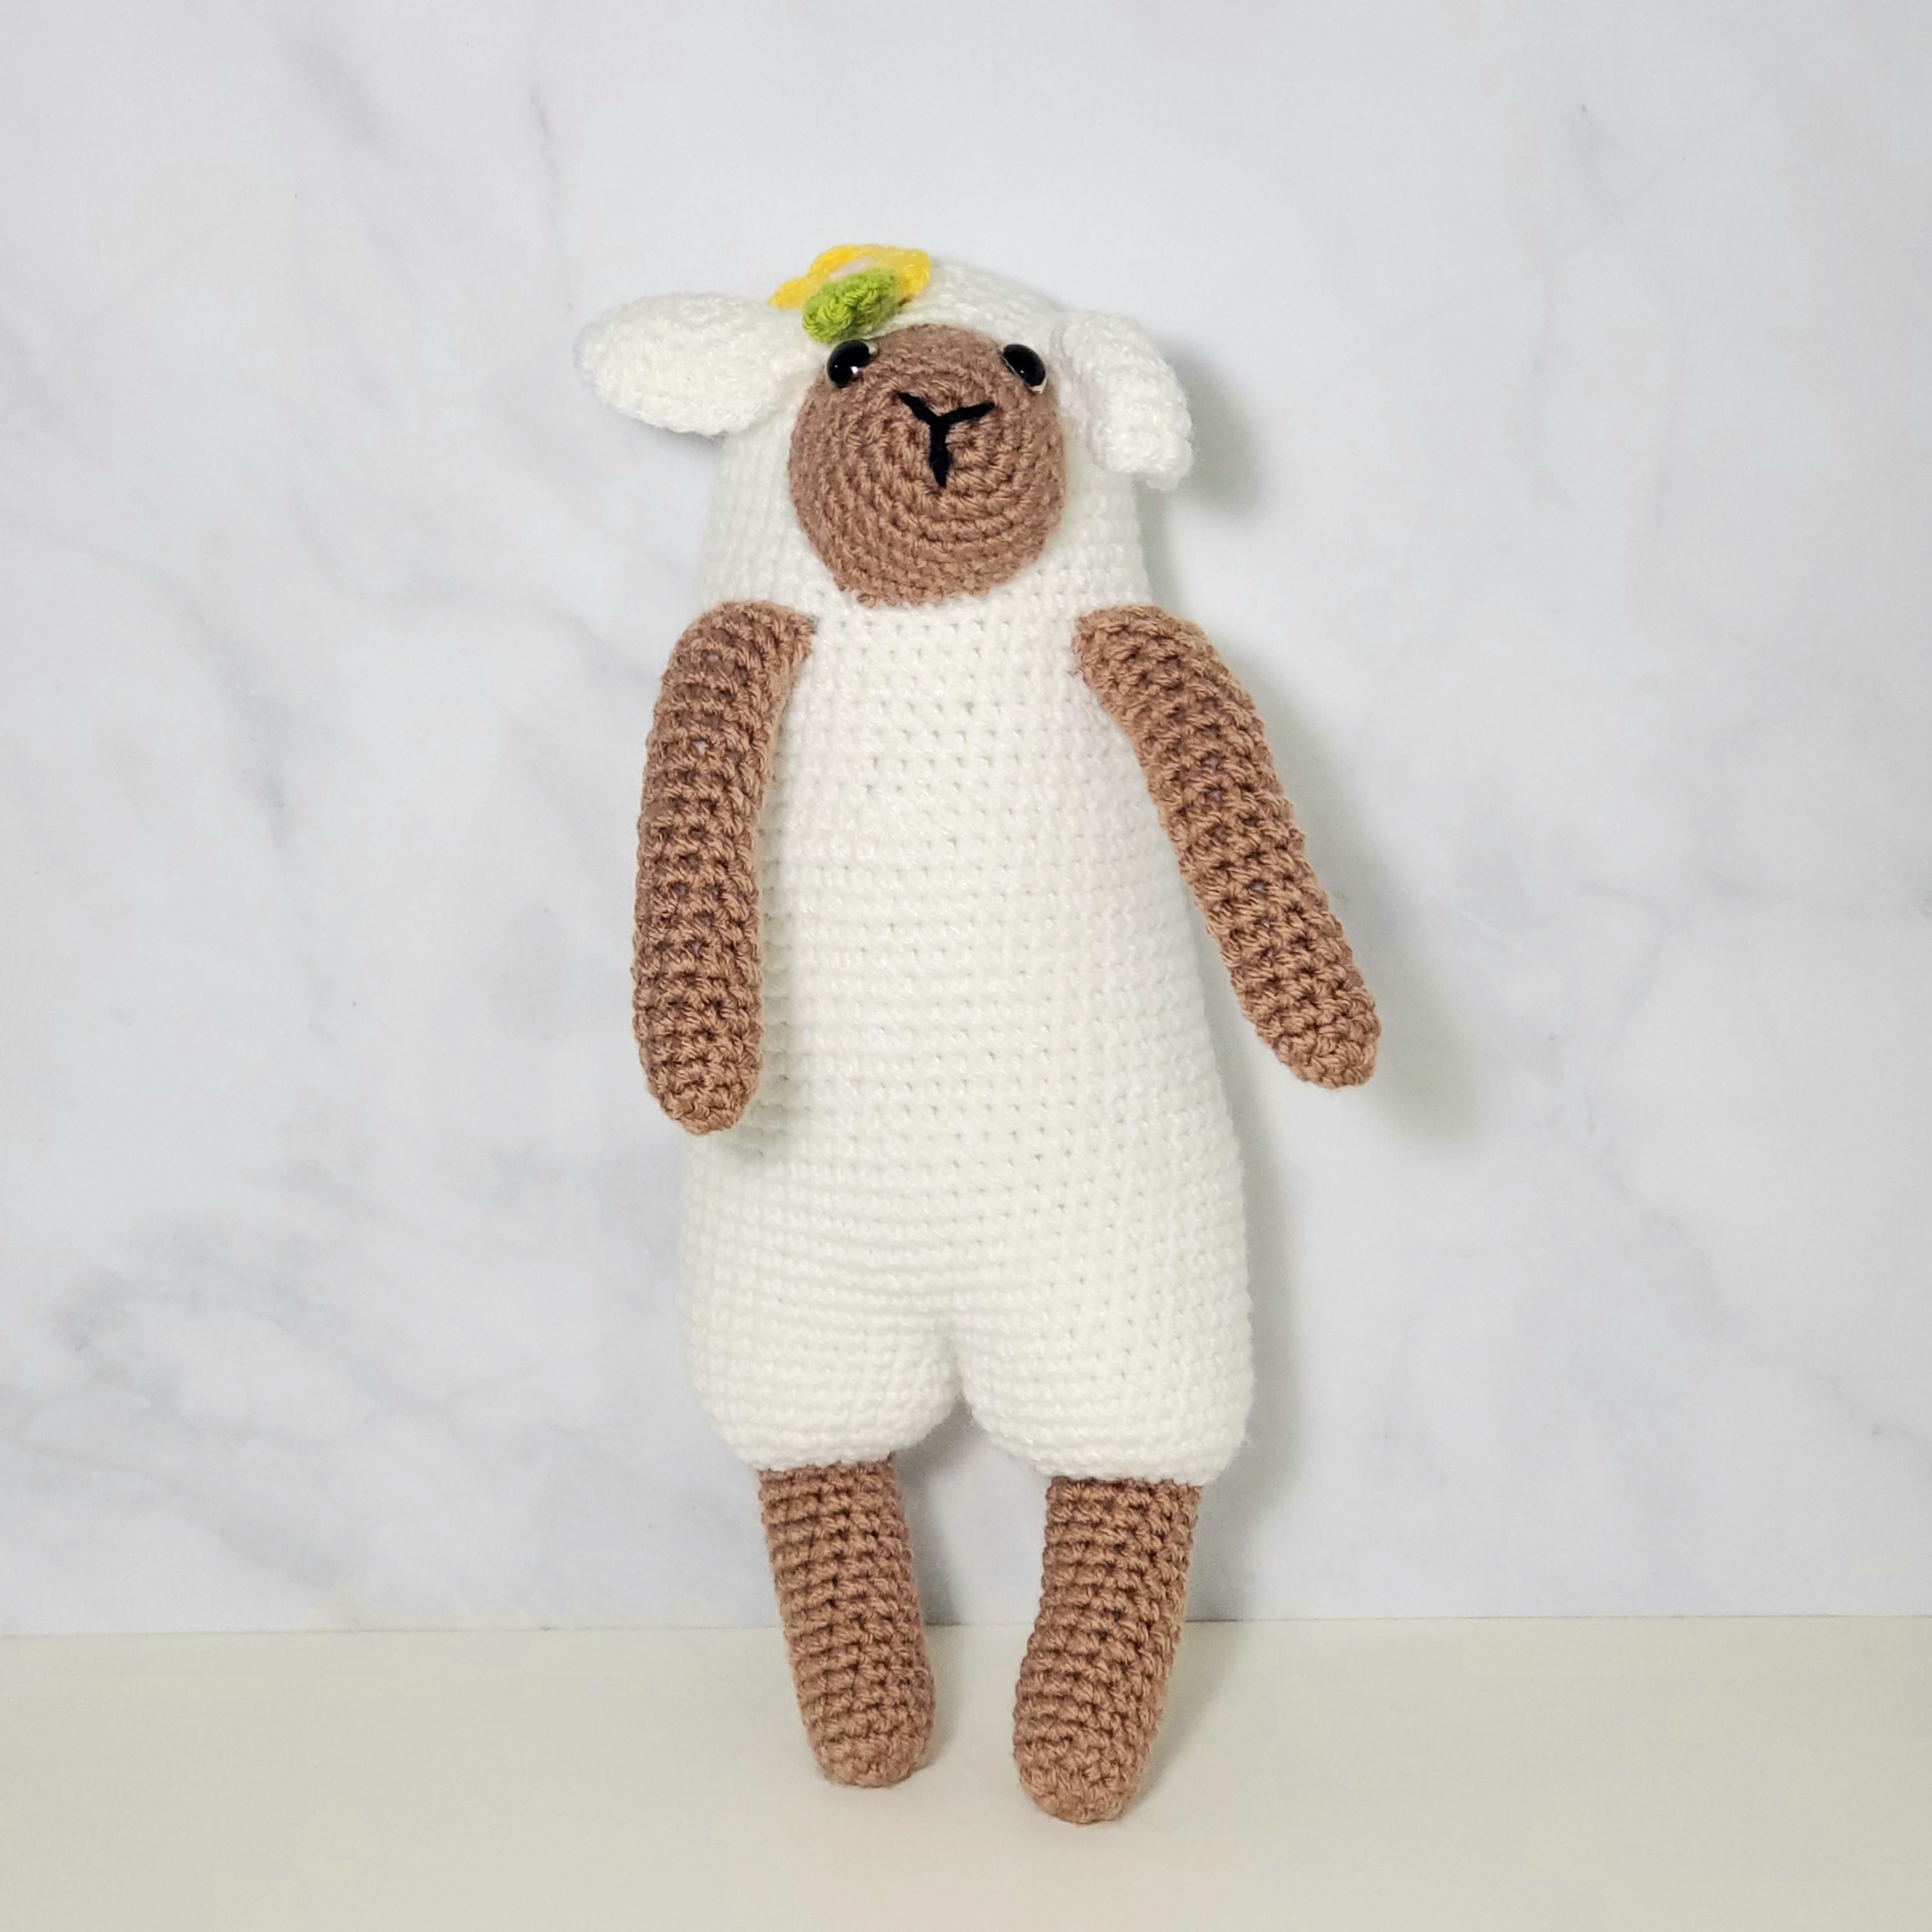 Crochet Character - Sheep